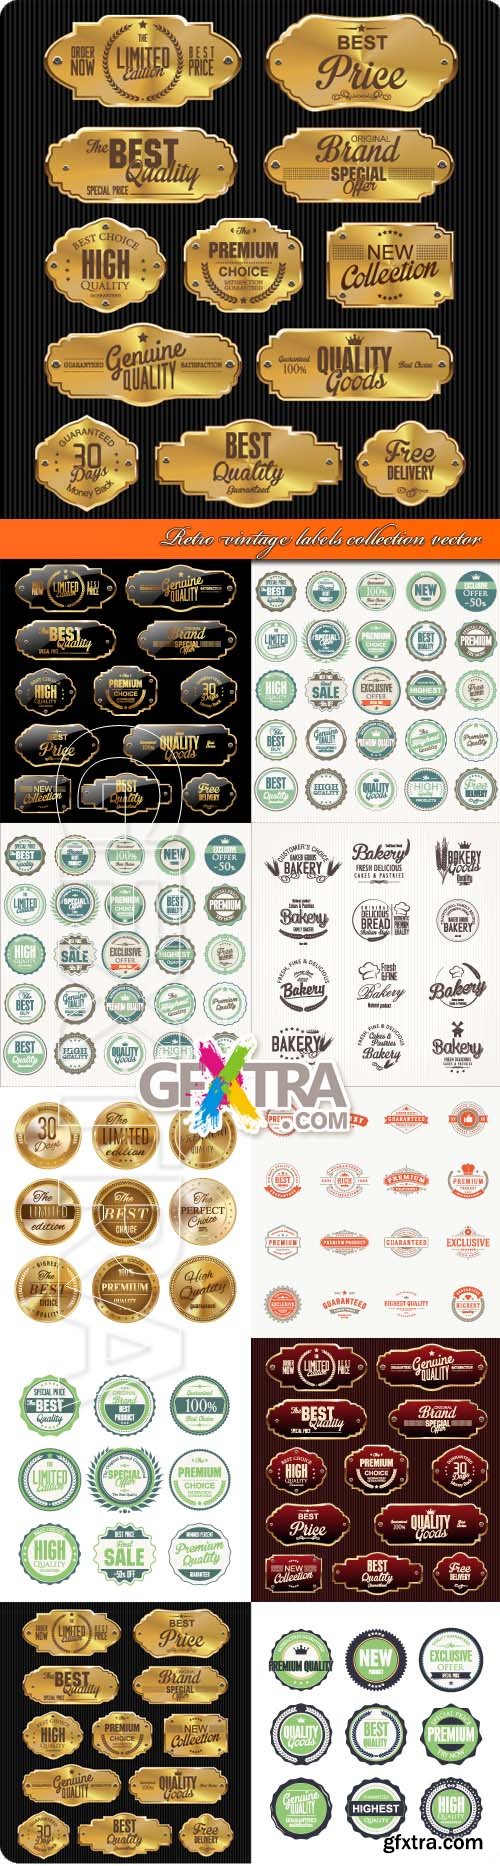 Retro vintage labels collection vector